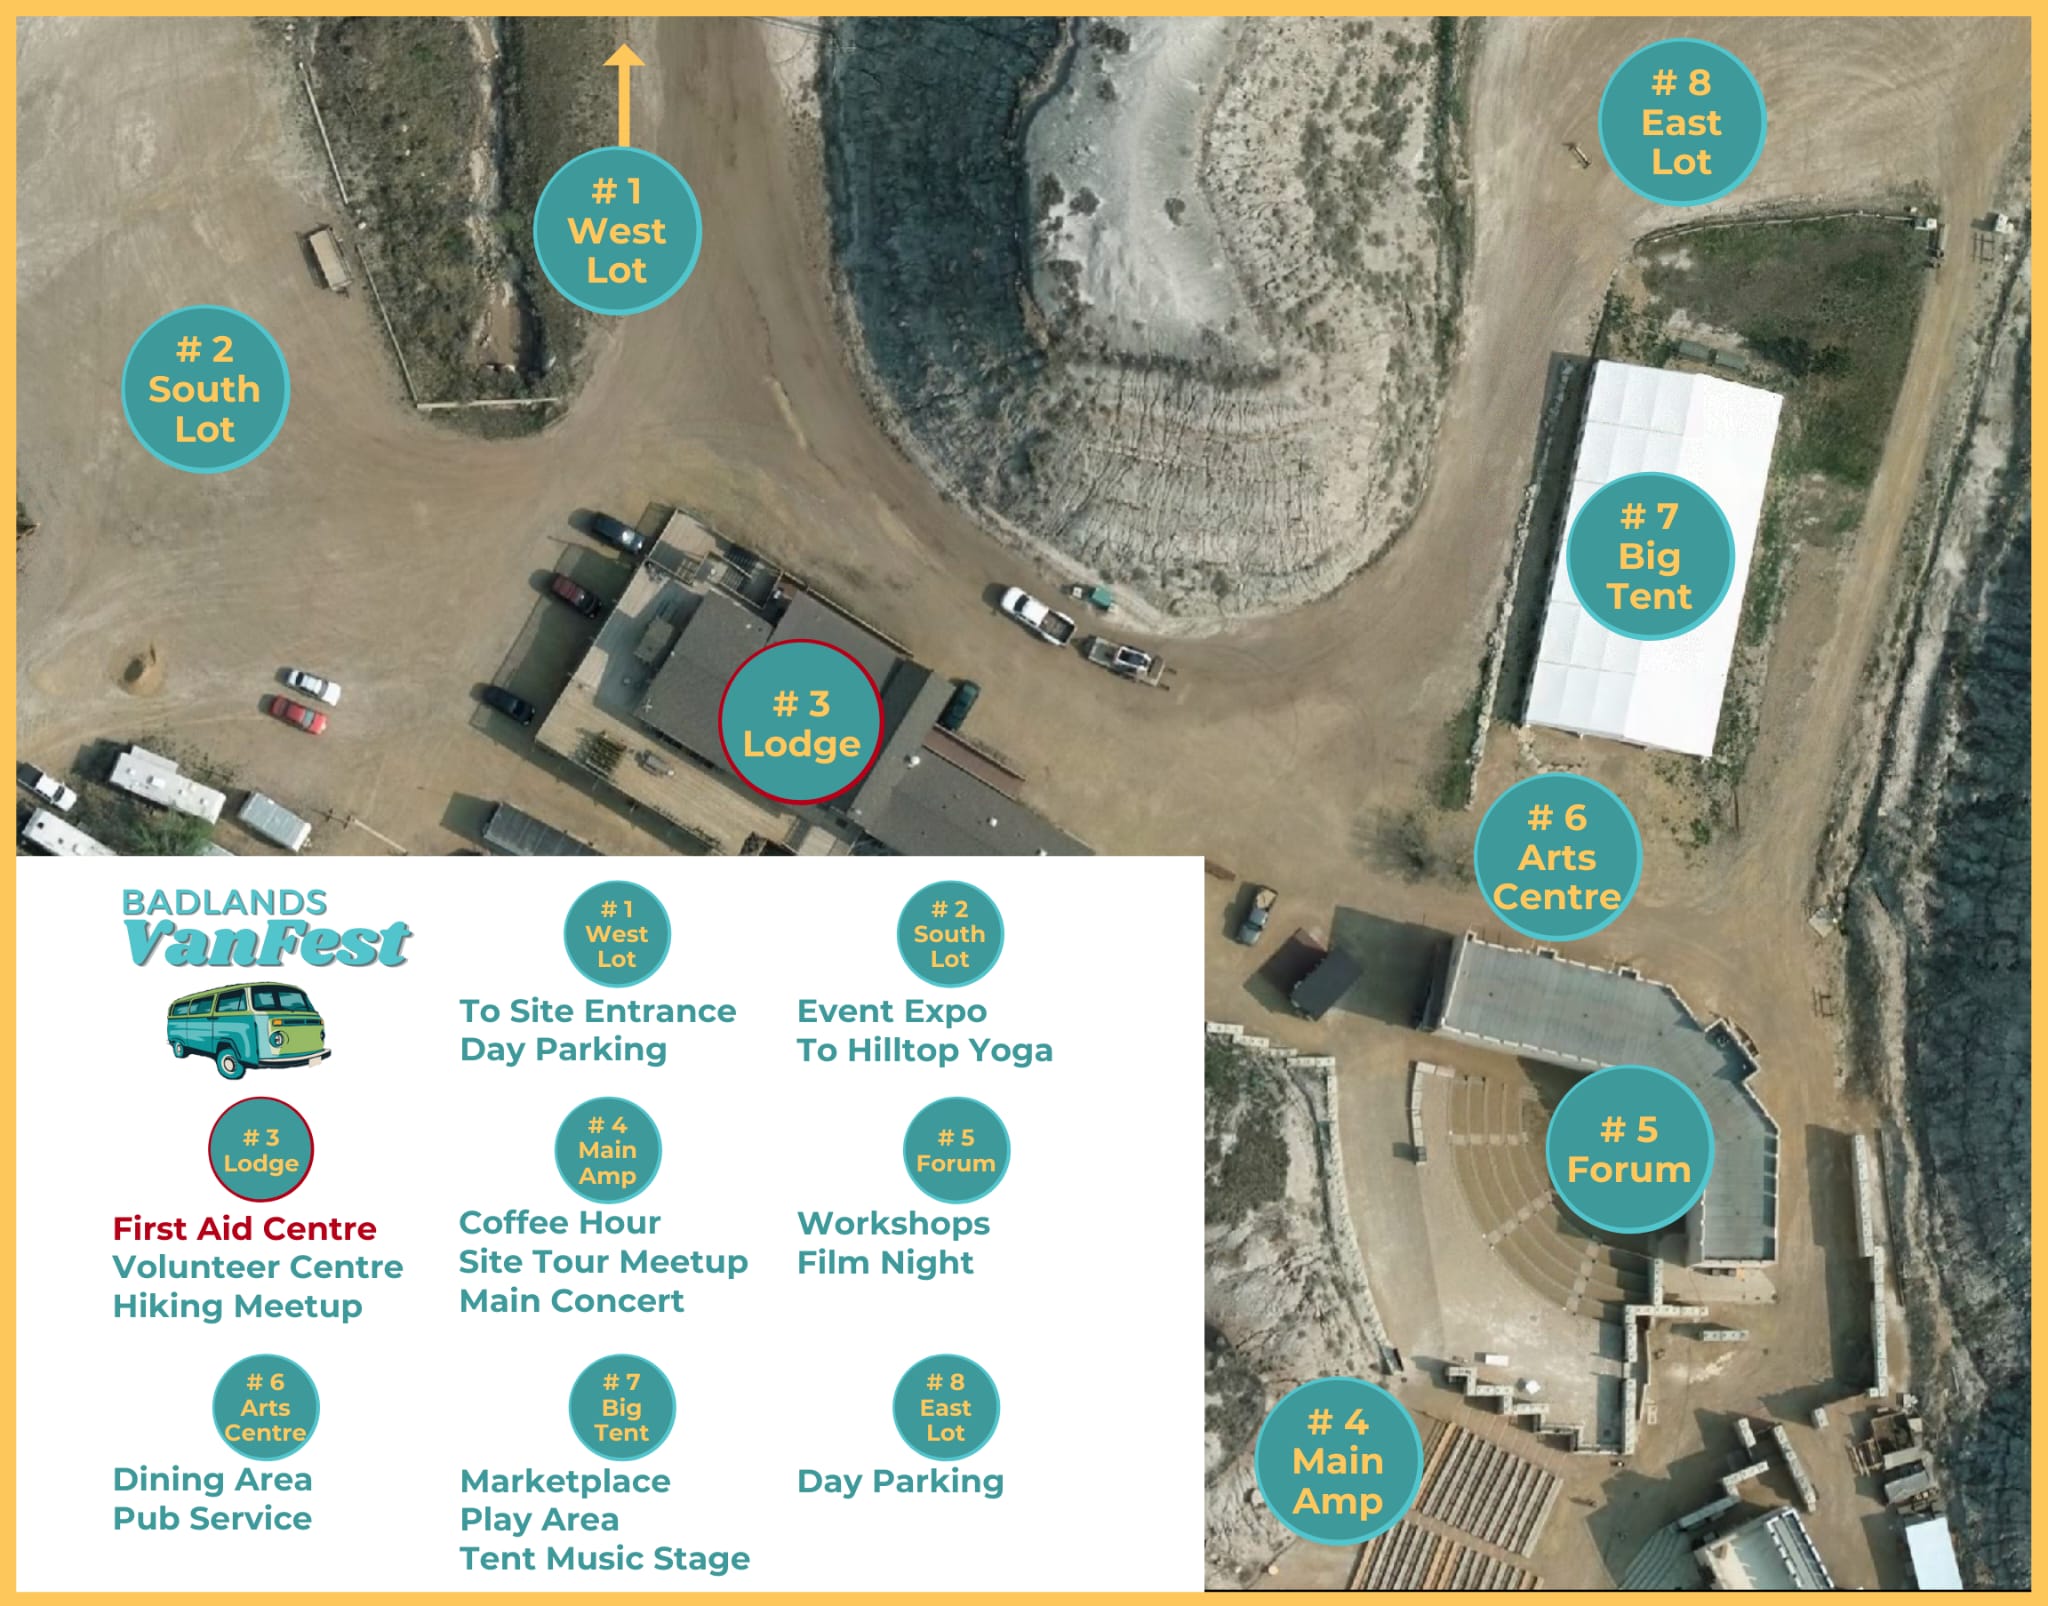 Map of the Badlands Vanfest event site